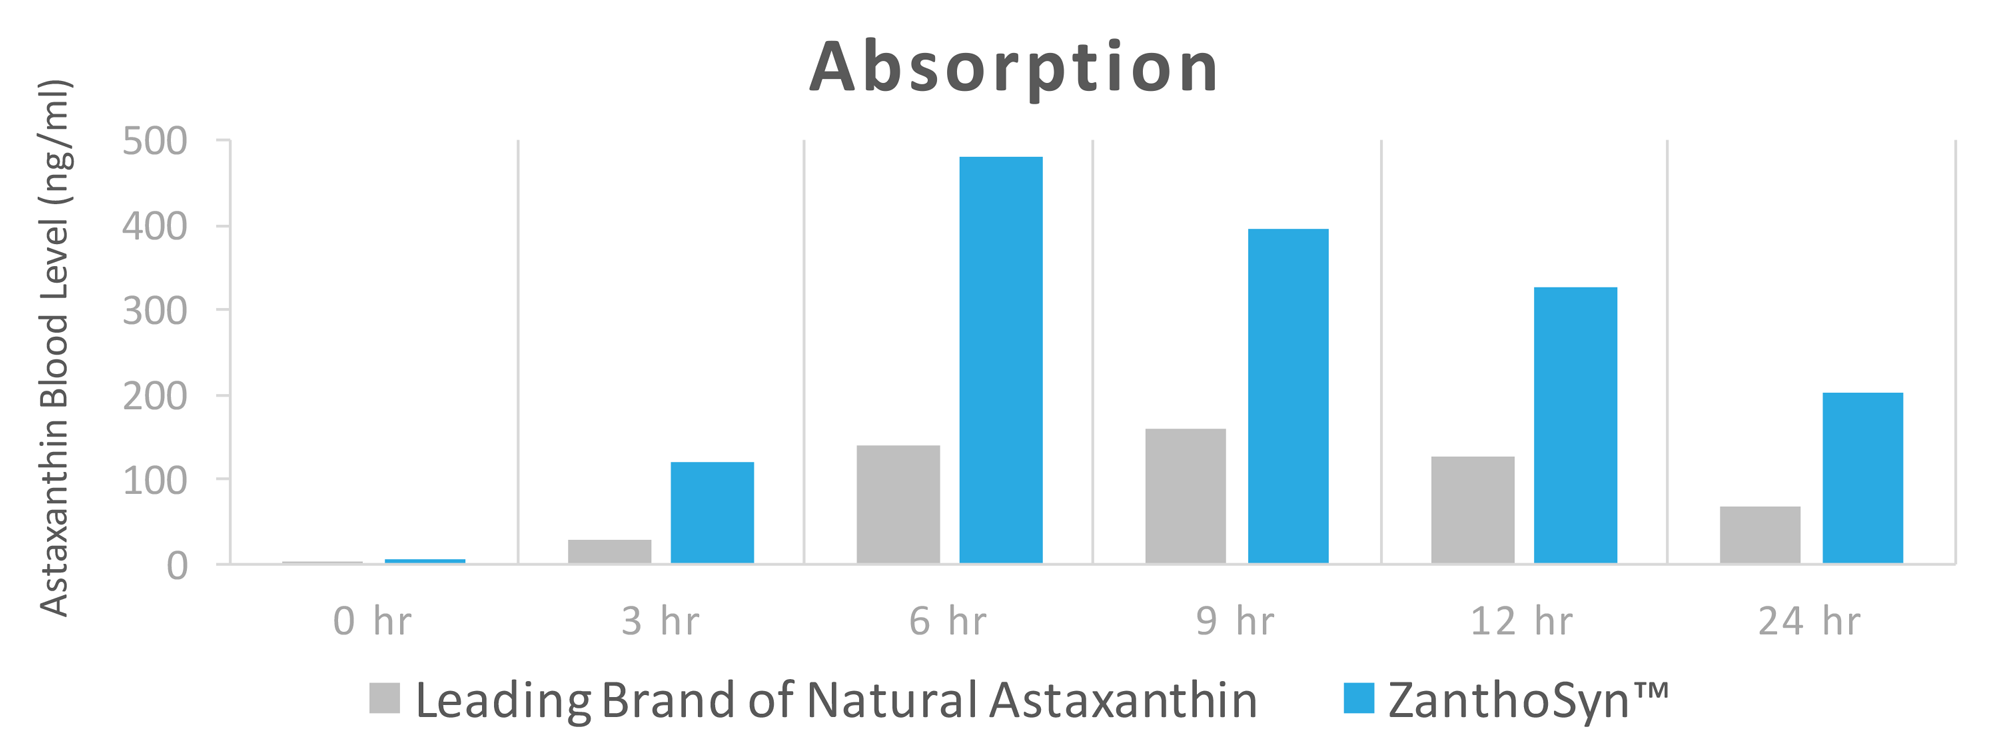 ZanthoSyn vs Natural Astaxanthin Absorption